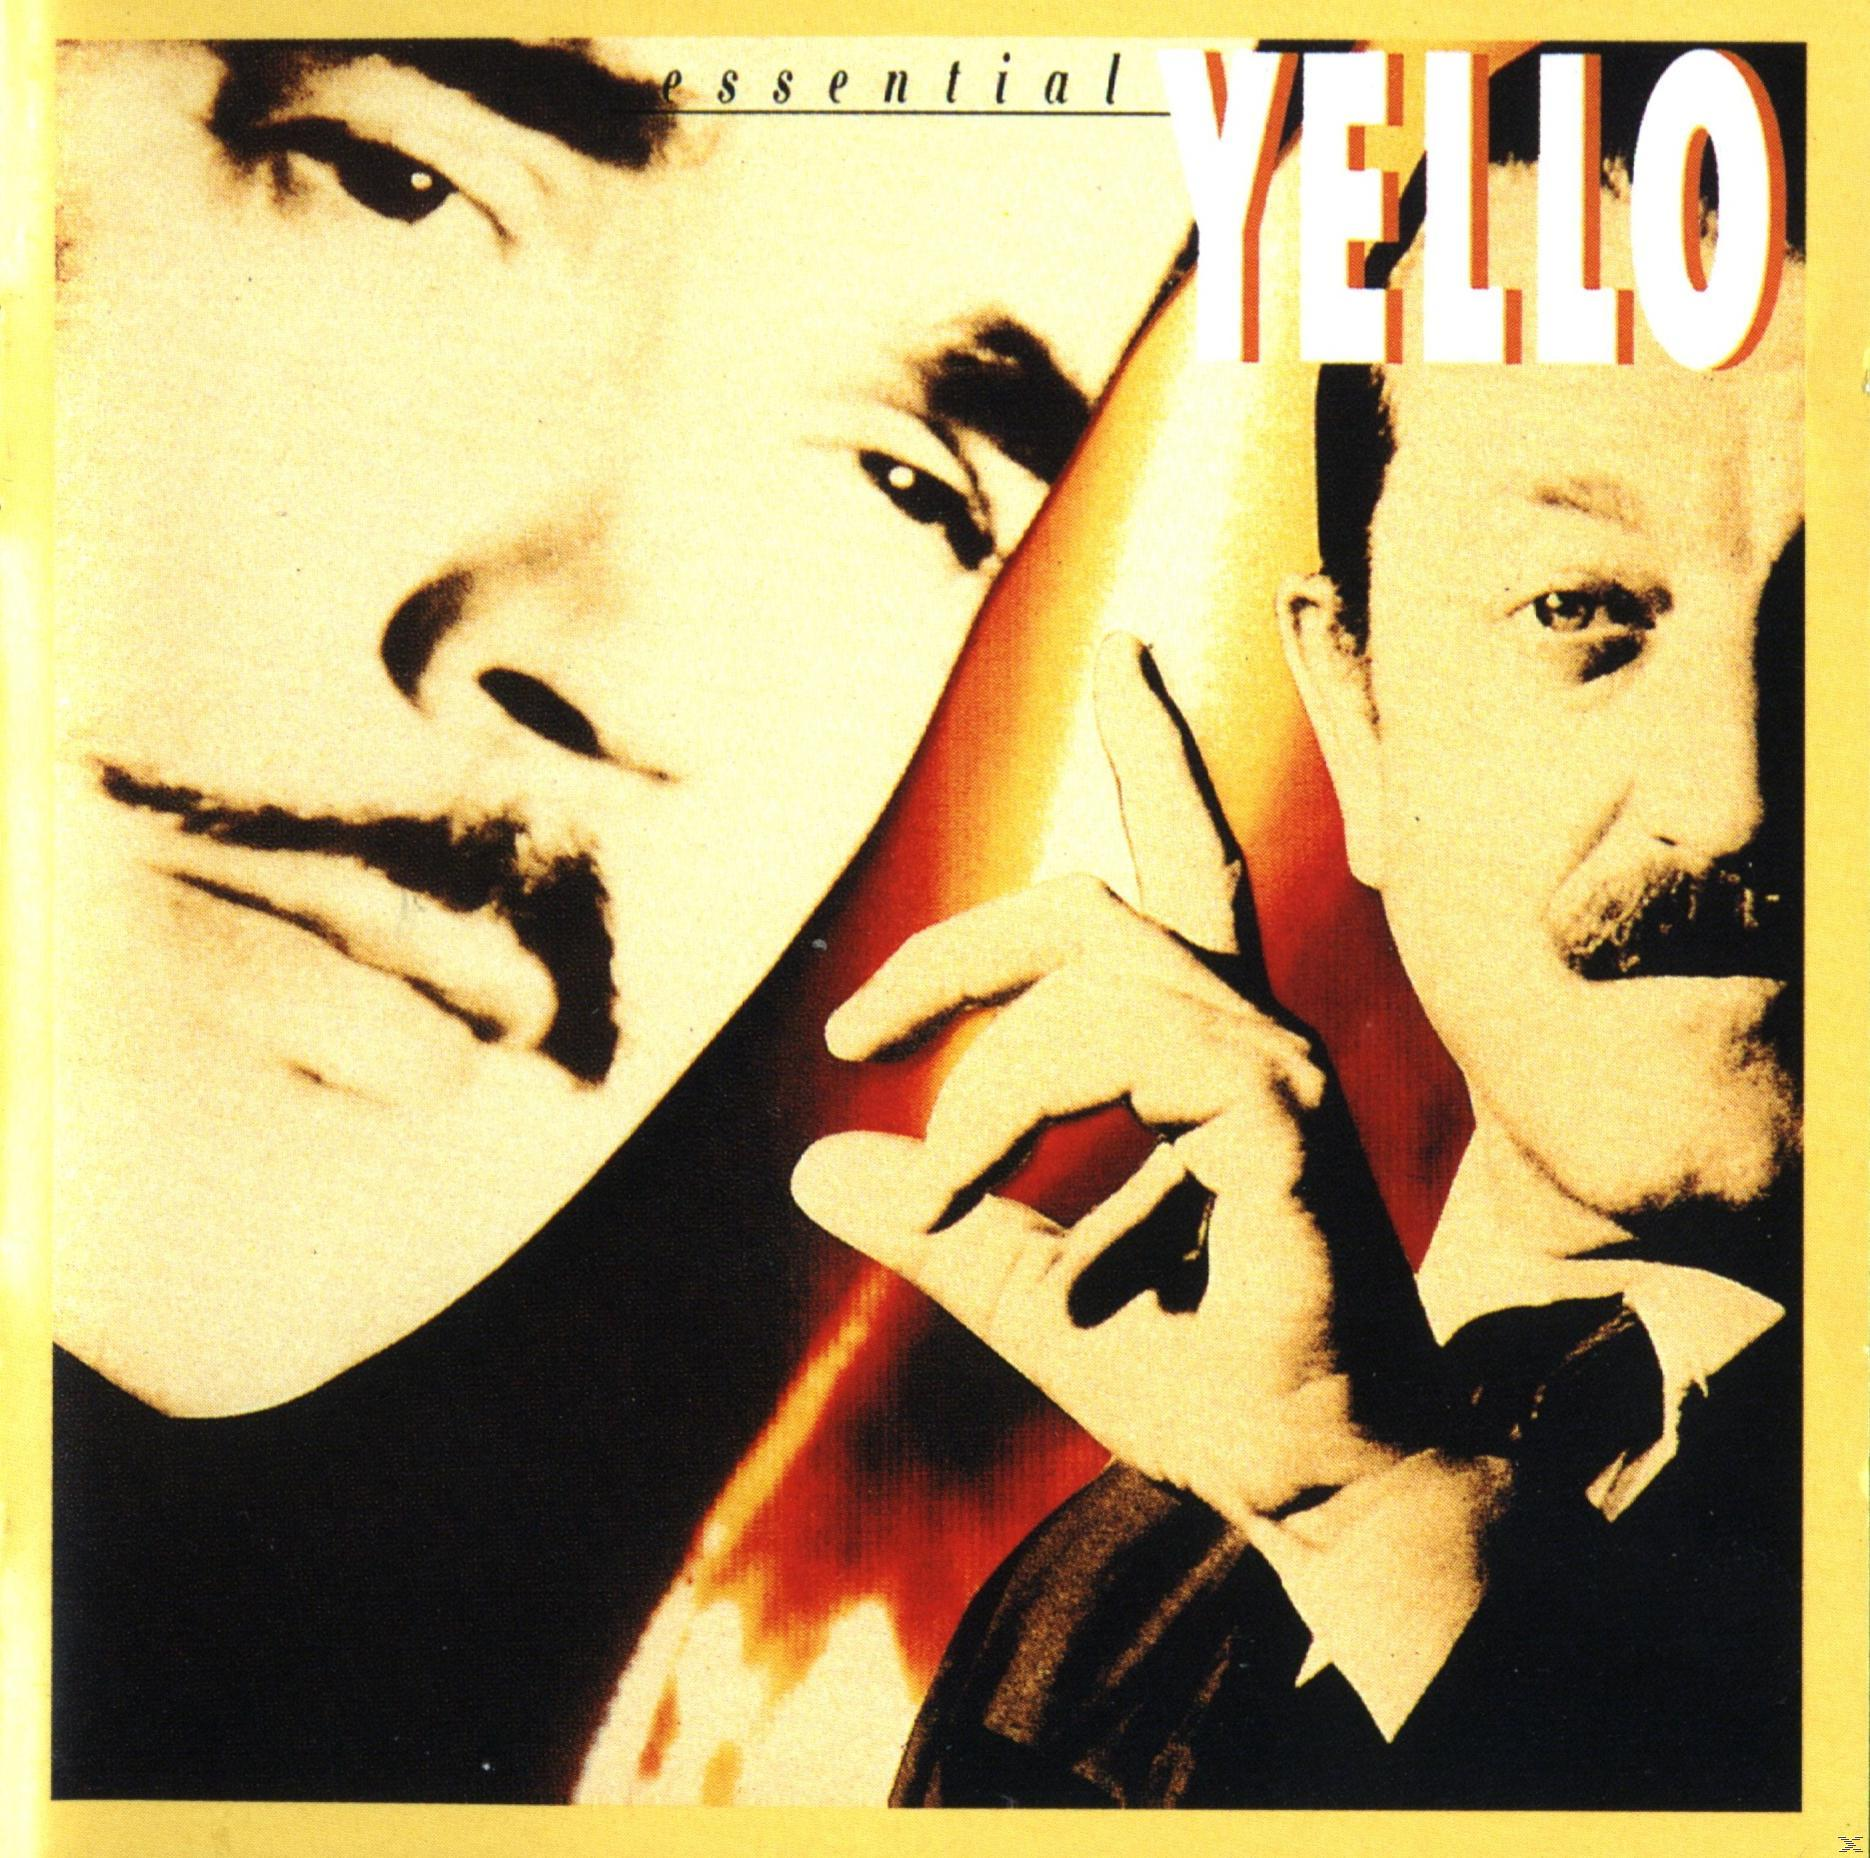 (CD) - Essential - Yello